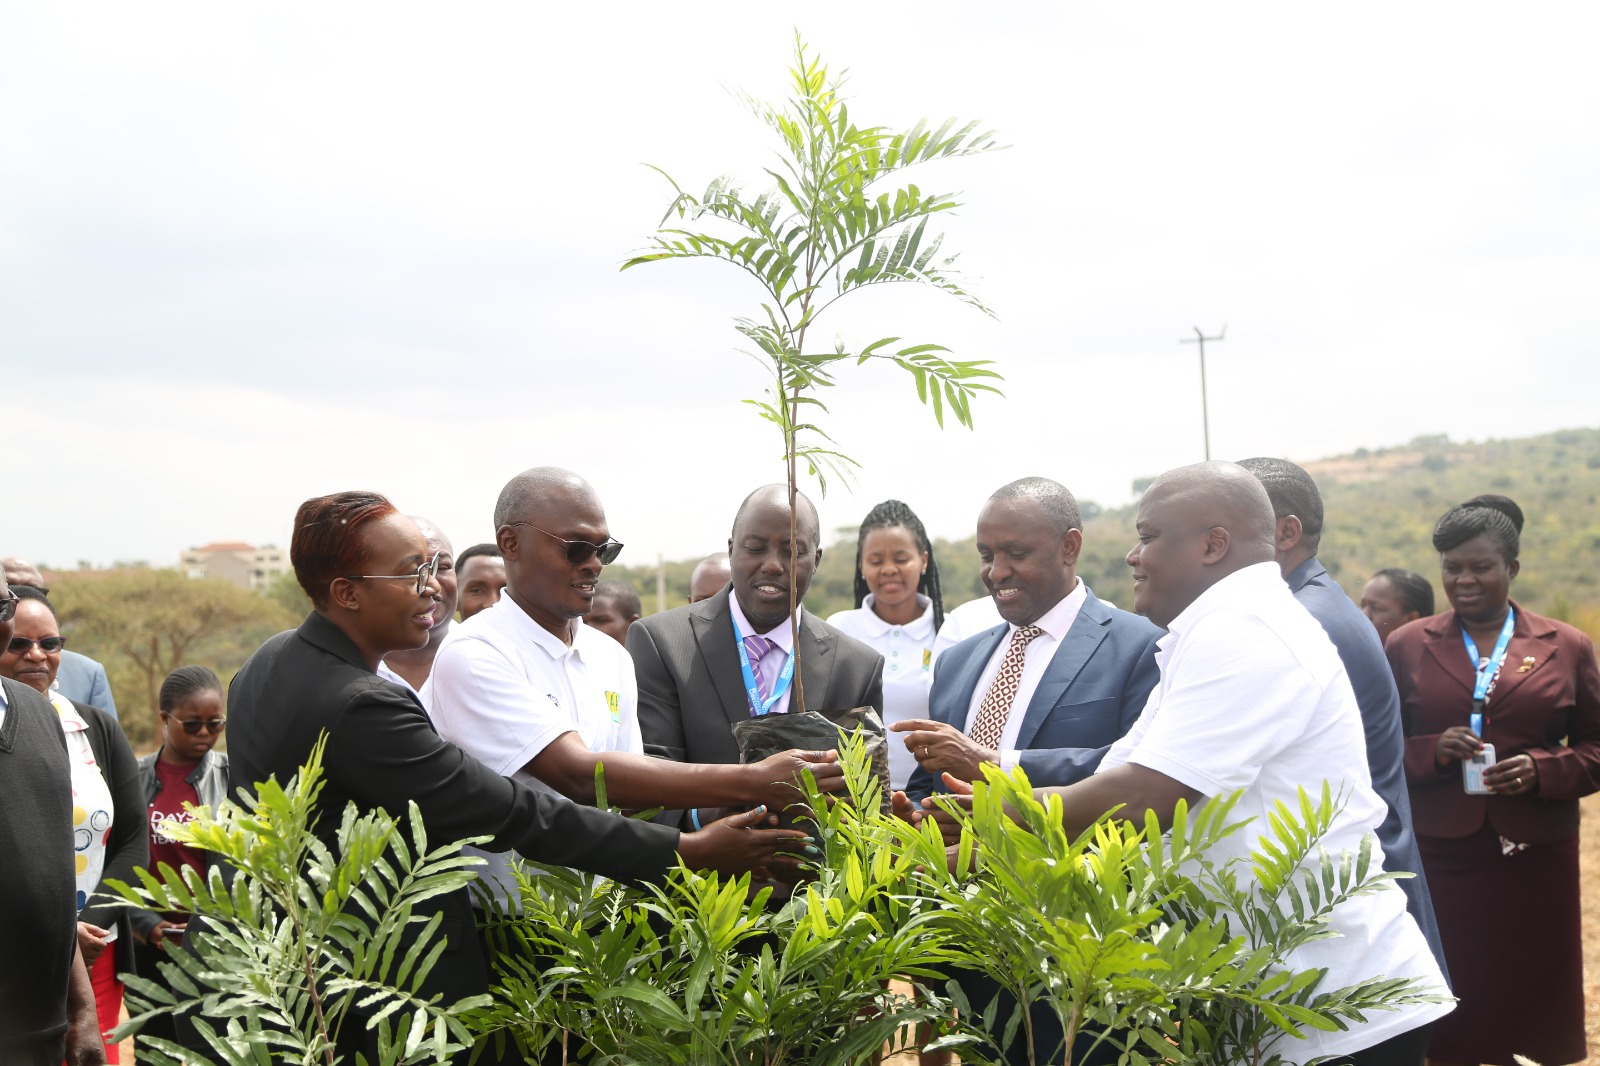 AA Kenya donates 1,000 tree seedlings to Daystar University